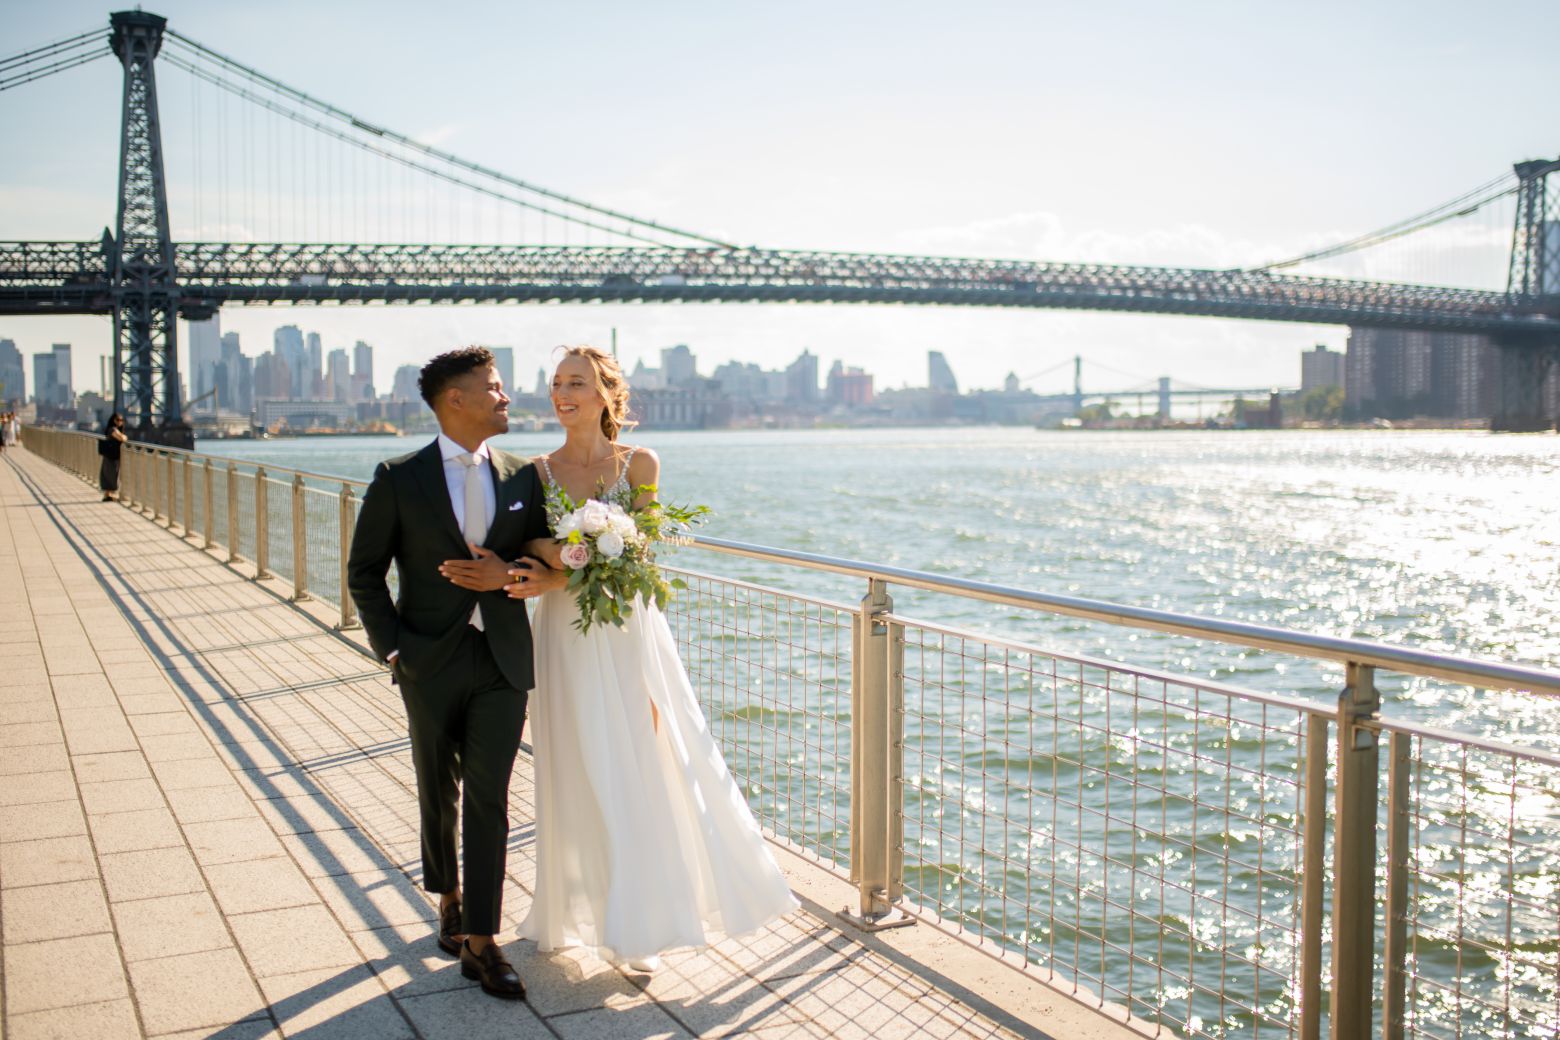 First Look Wedding Photos Pros, Cons & Insider Tips